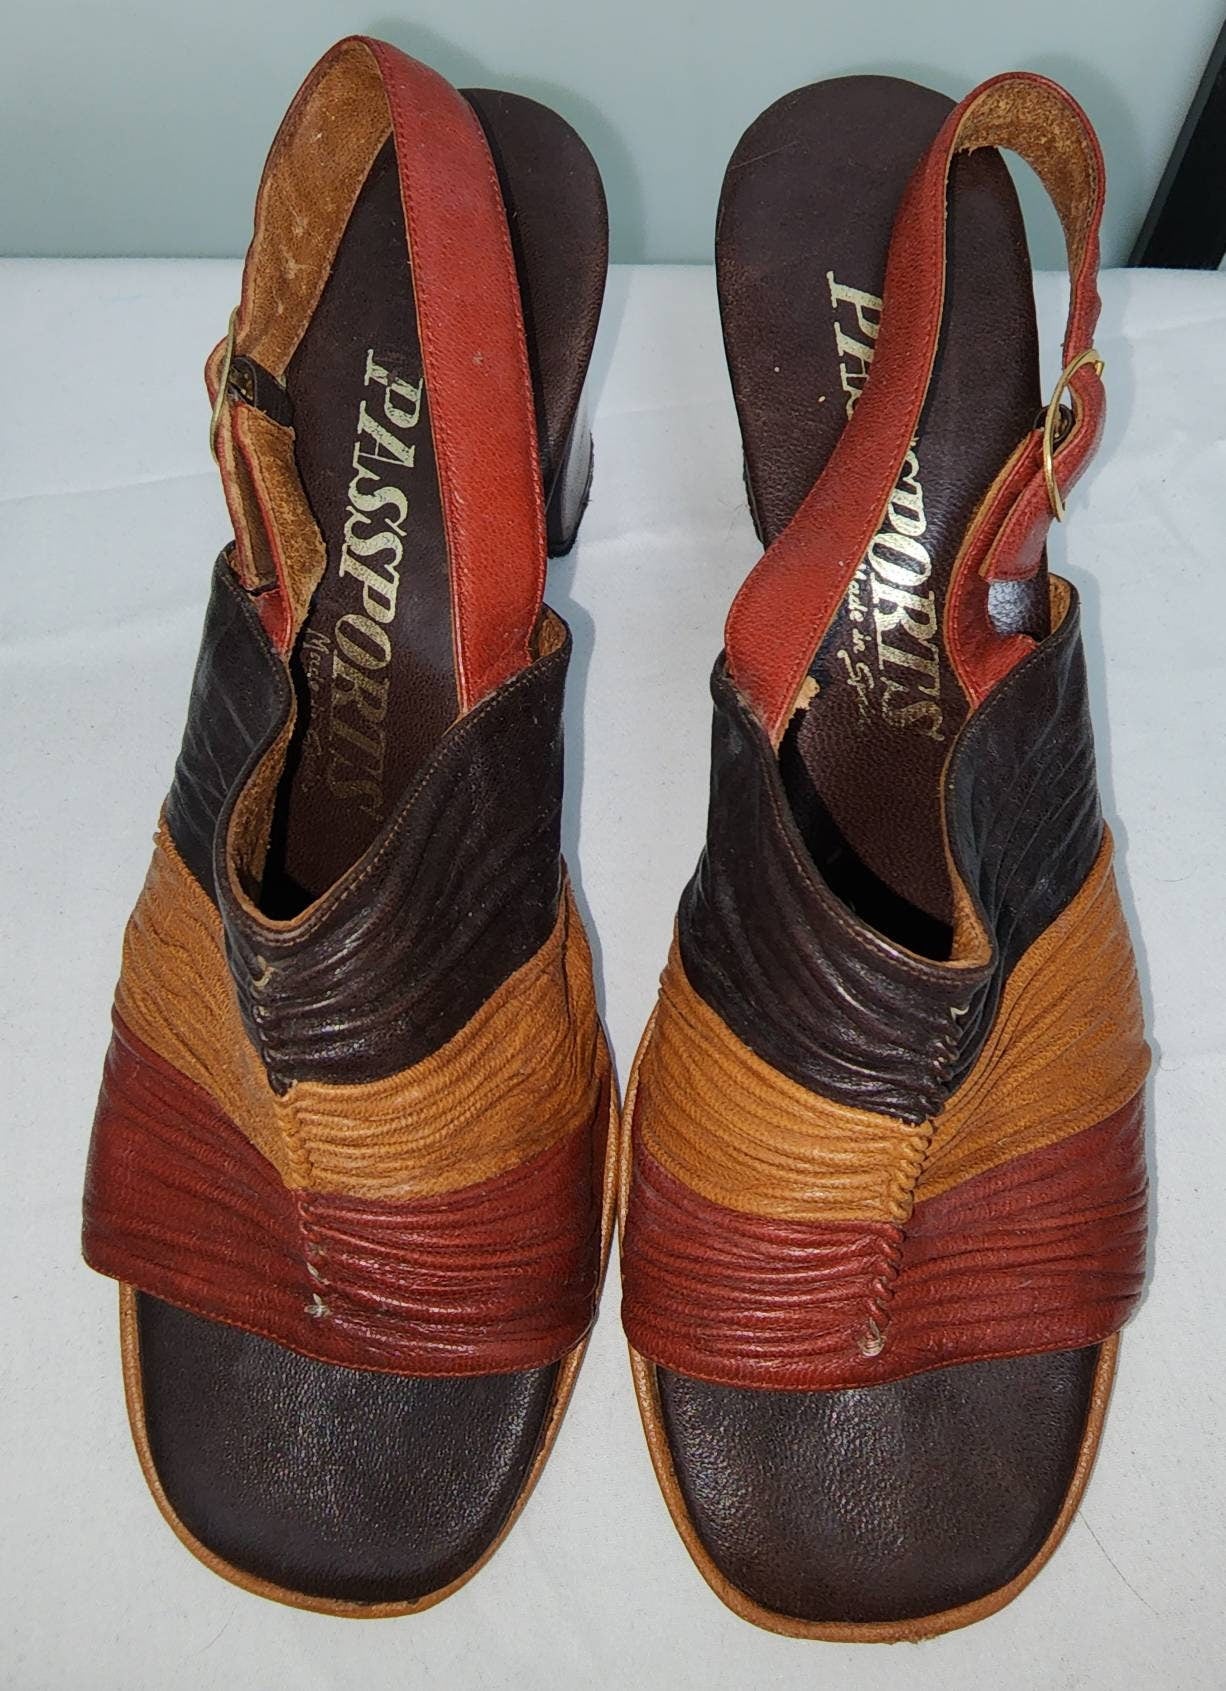 Vintage 1960s Sandals Brown Tan Reddish Leather Chunky Heel Slingback Sandals Buckles Passports Spain Mod 6 1/2